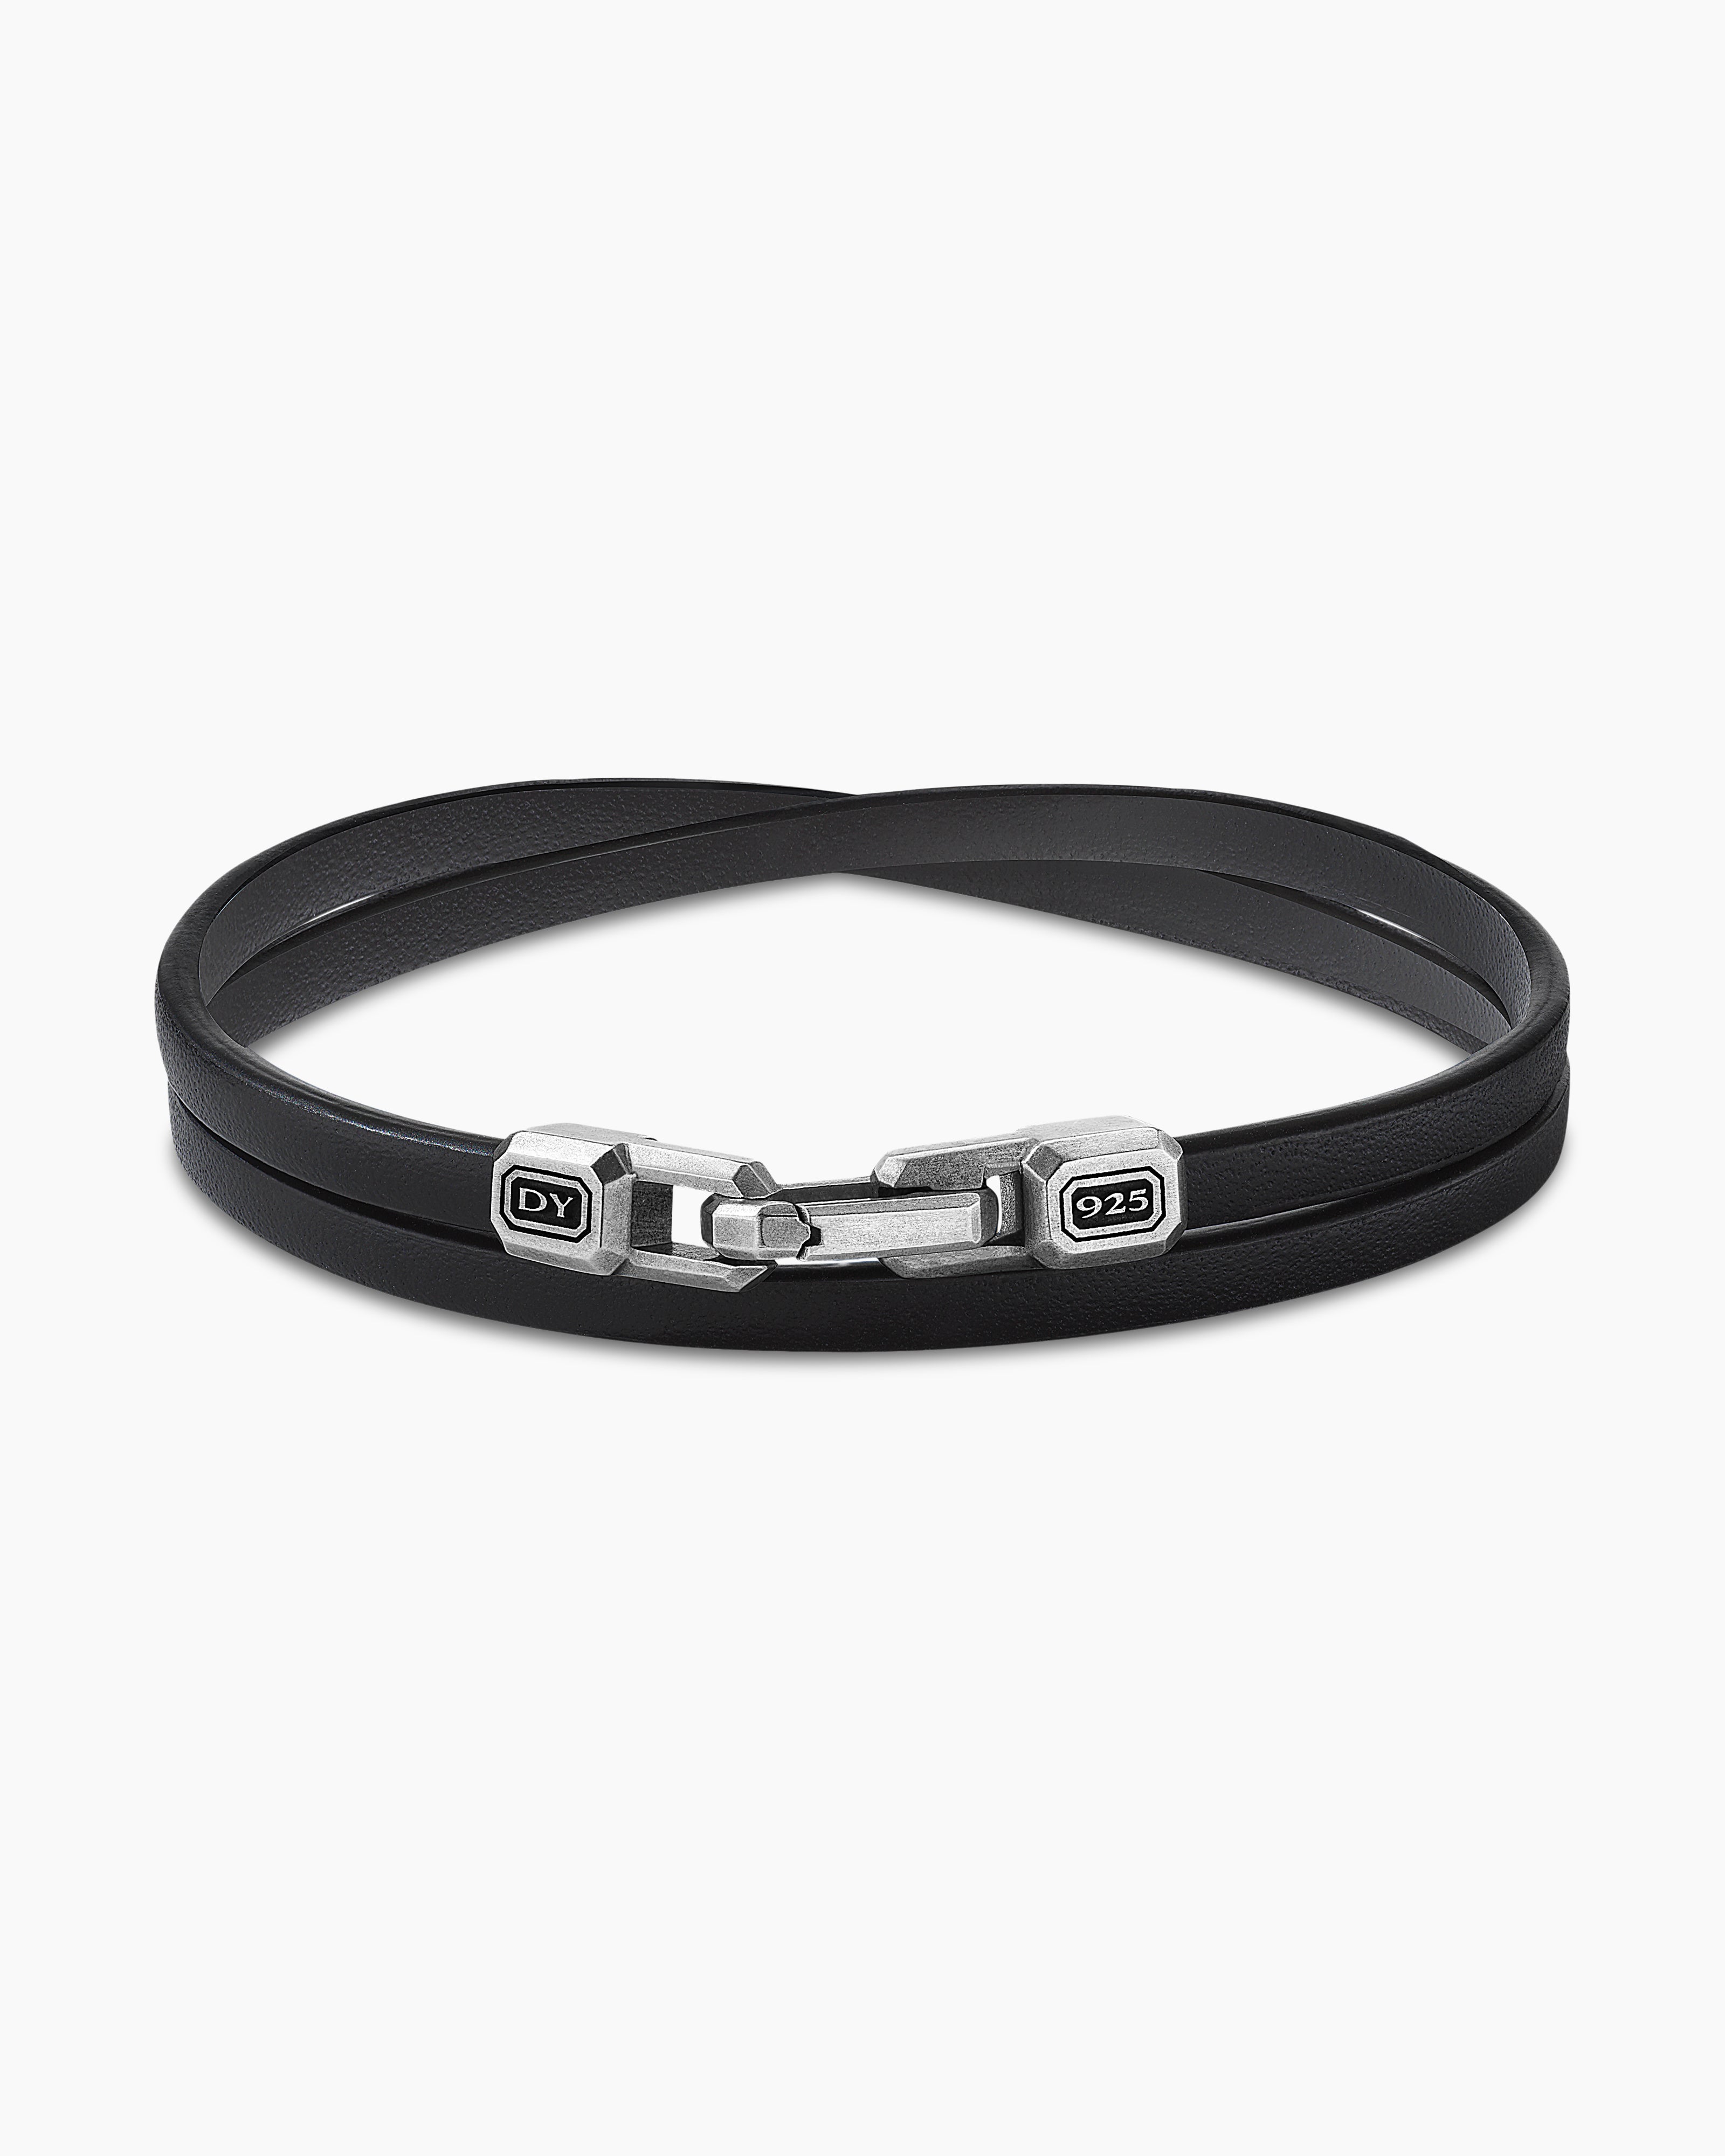 DAVID YURMAN Streamline Double Wrap Black Leather Bracelet